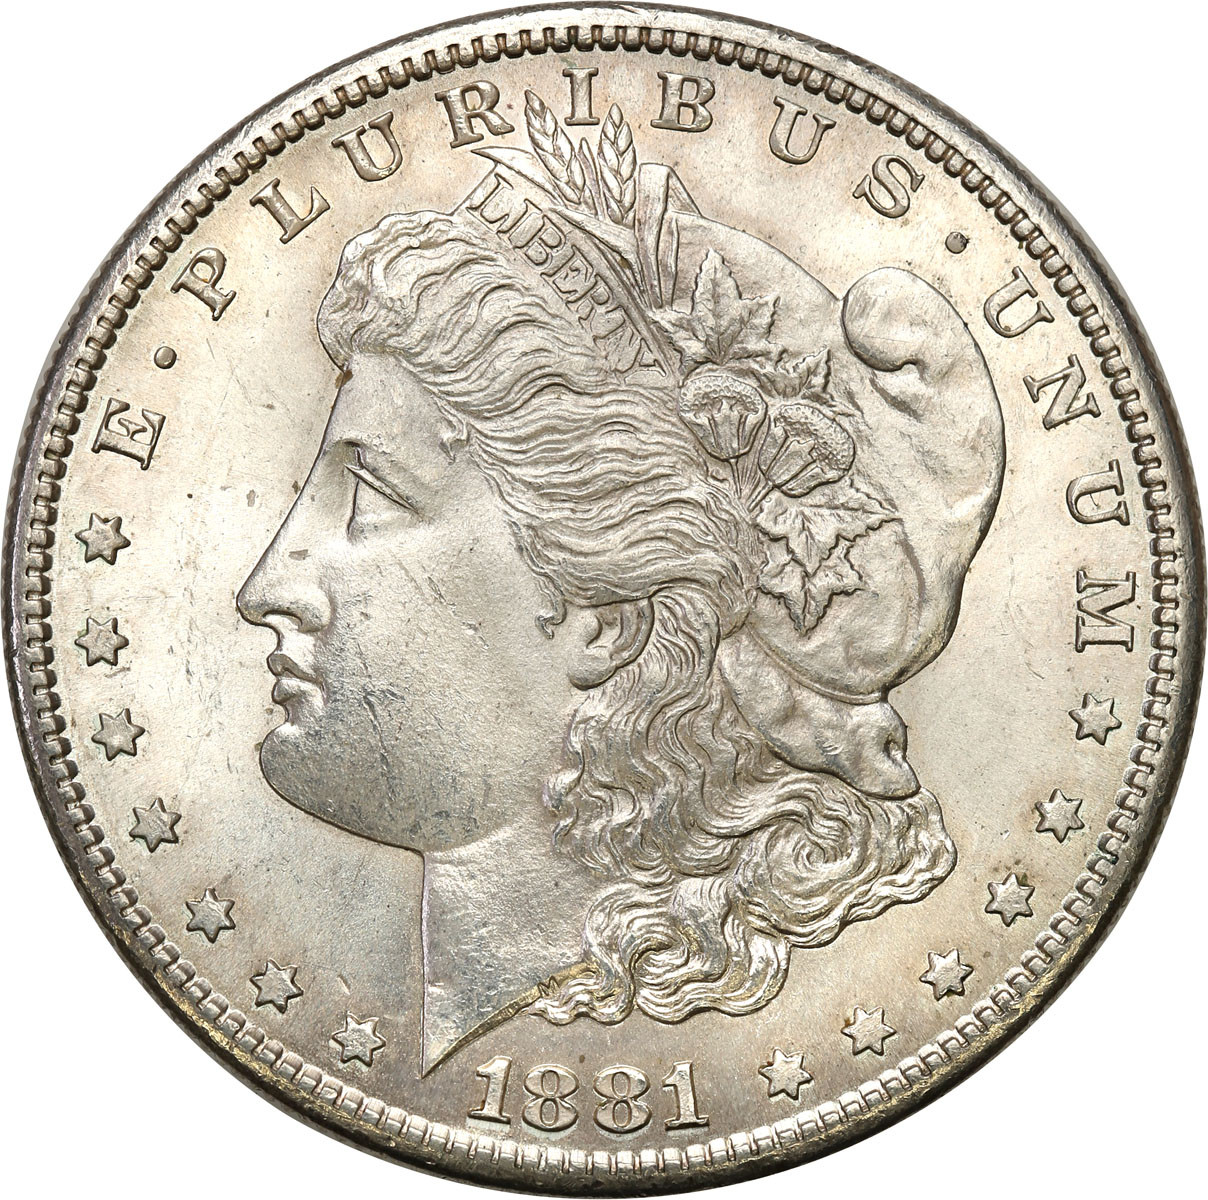 USA. 1 dolar 1881 S, San Francisco